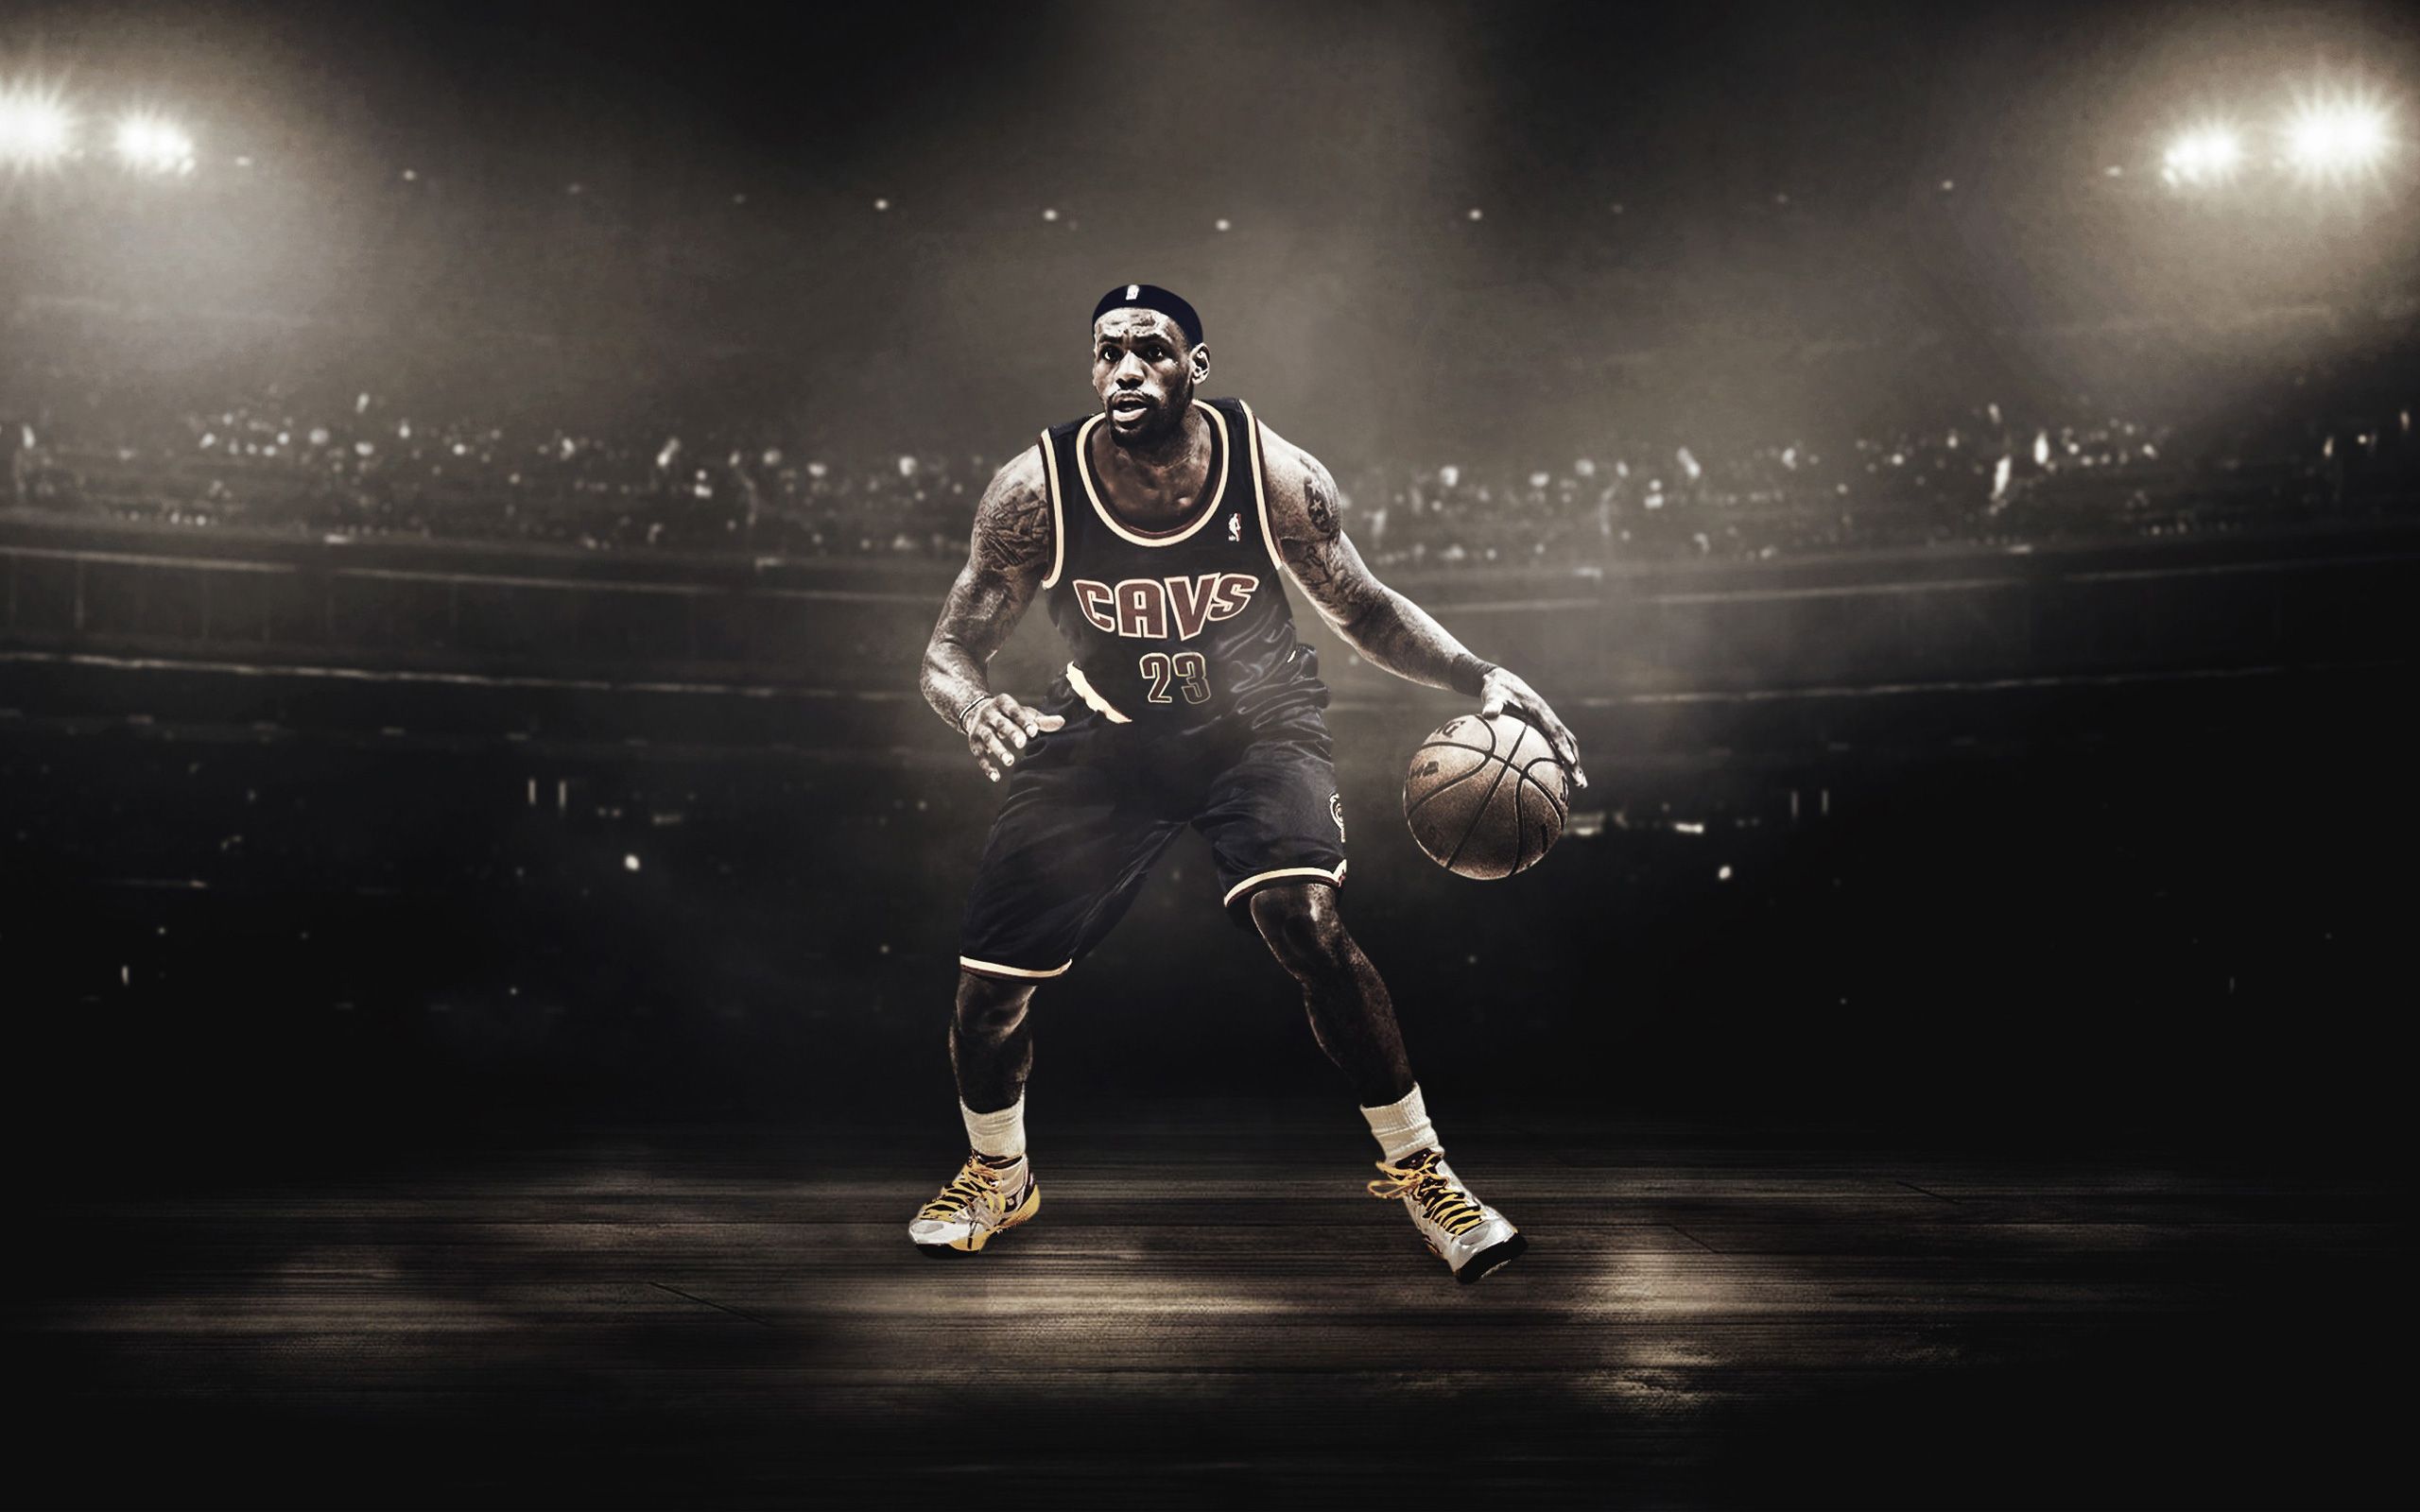 Basketball 4K wallpaper for your desktop or mobile screen free